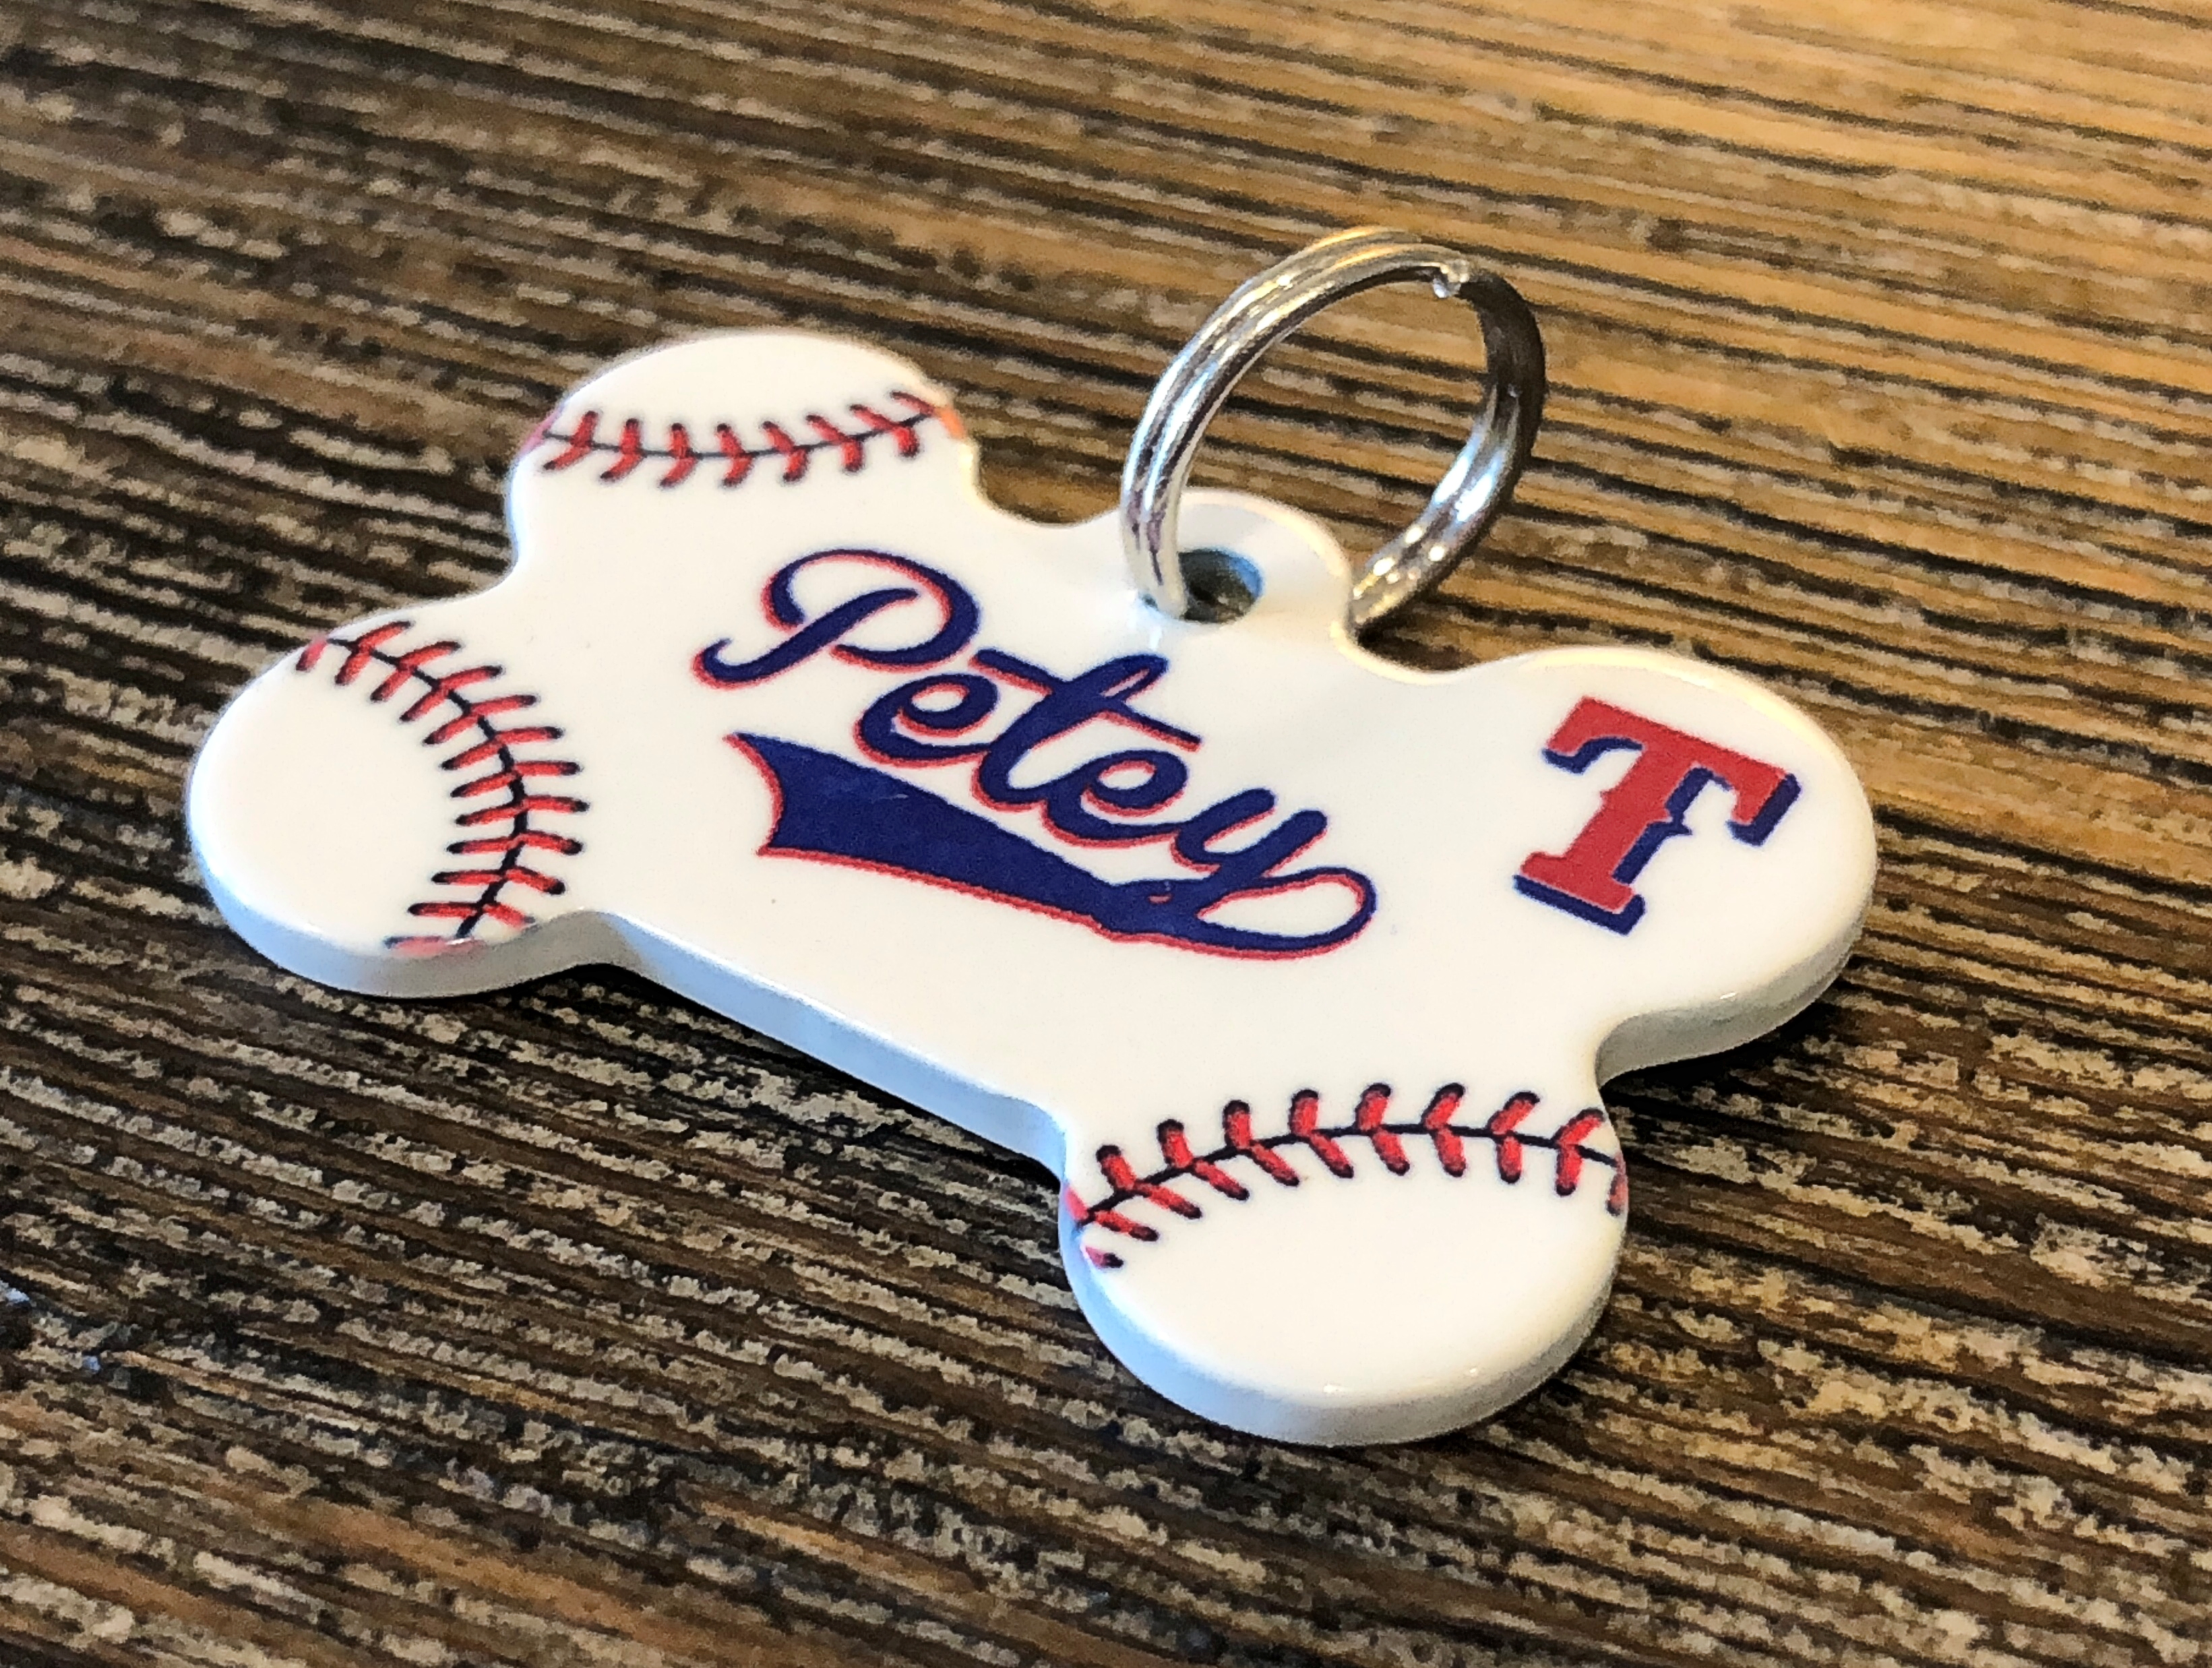 Texas Pro Baseball Tag made with sublimation printing